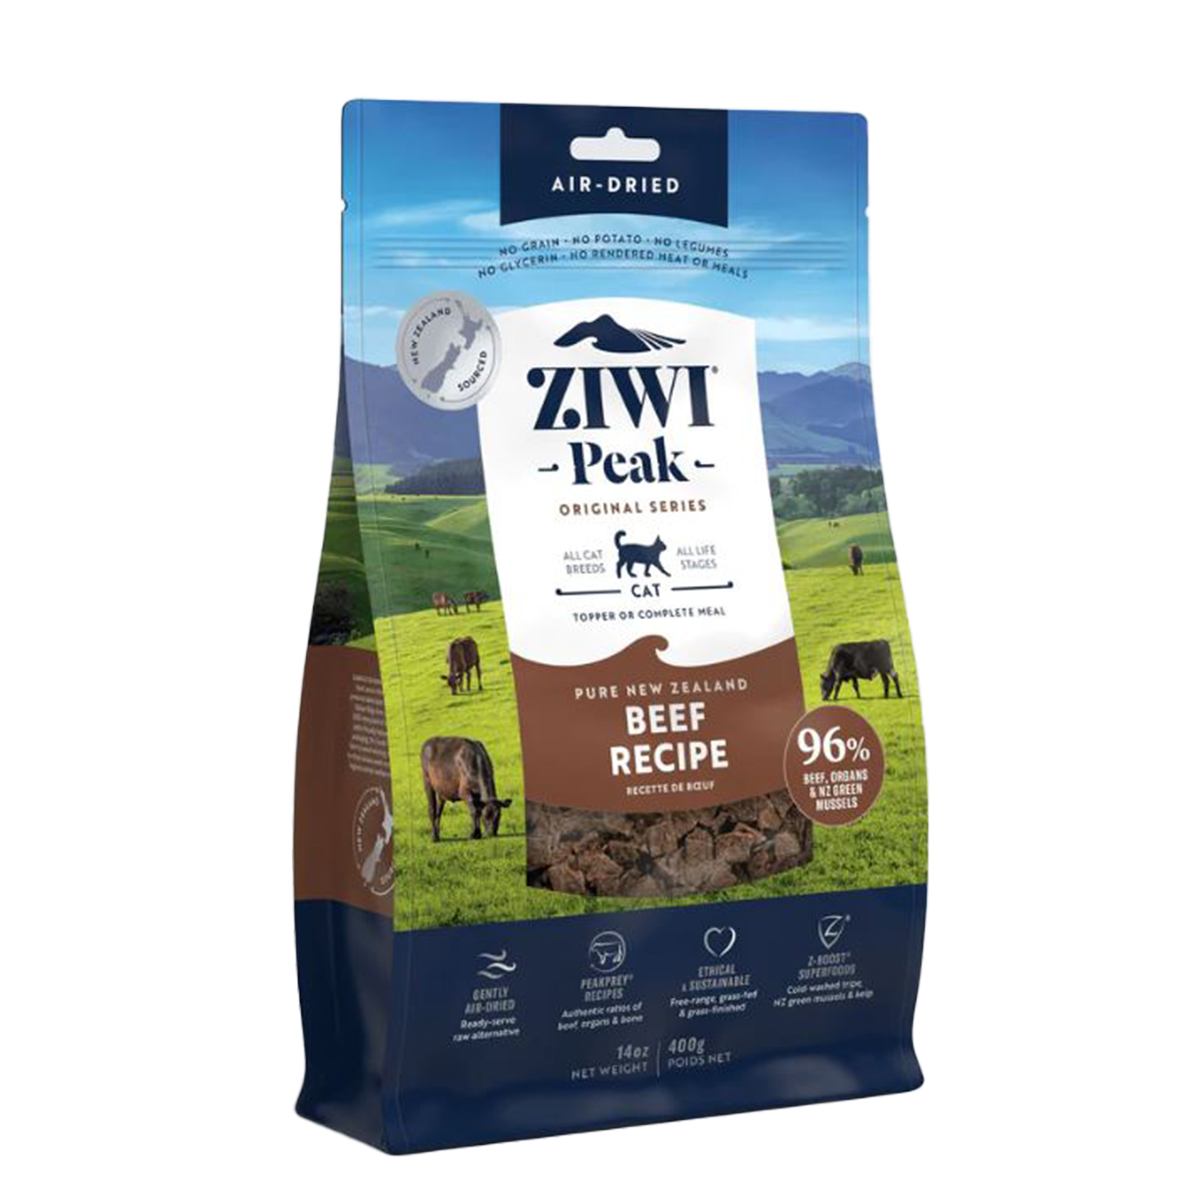 Ziwi Peak Beef Air-Dried Cat Food